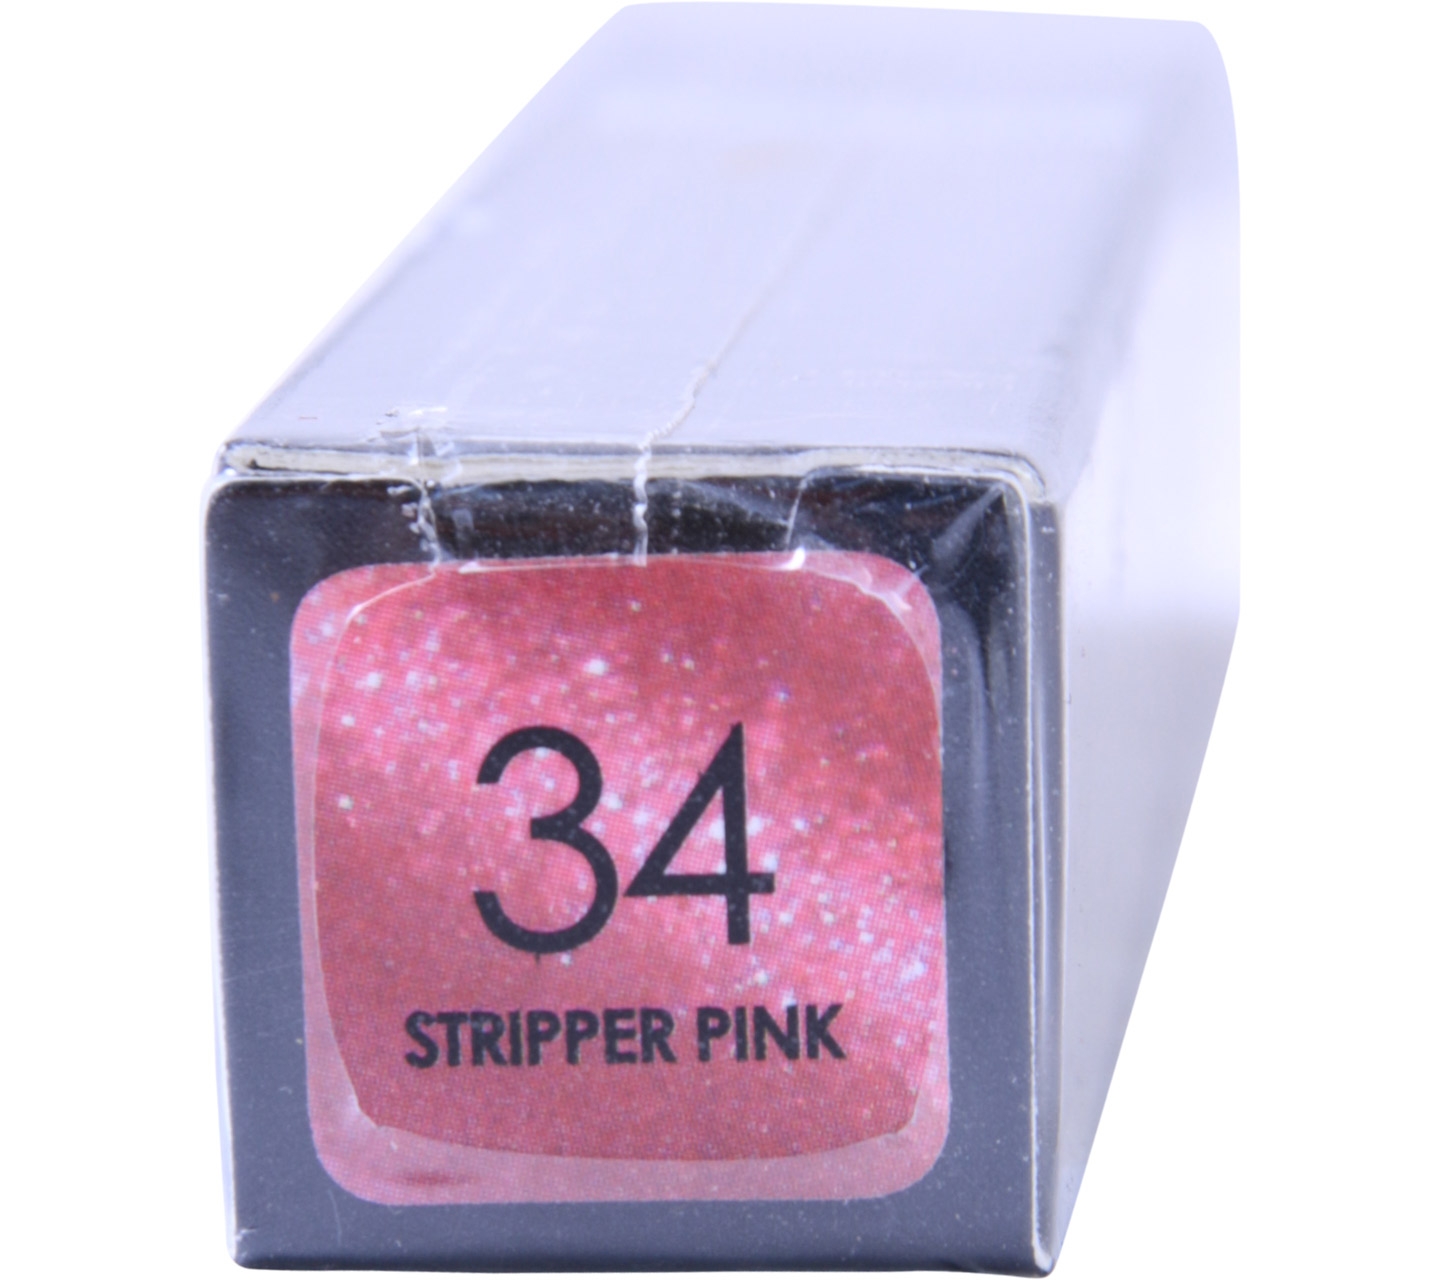 FOCALLURE LUXE 34 Stripper Pink Lips